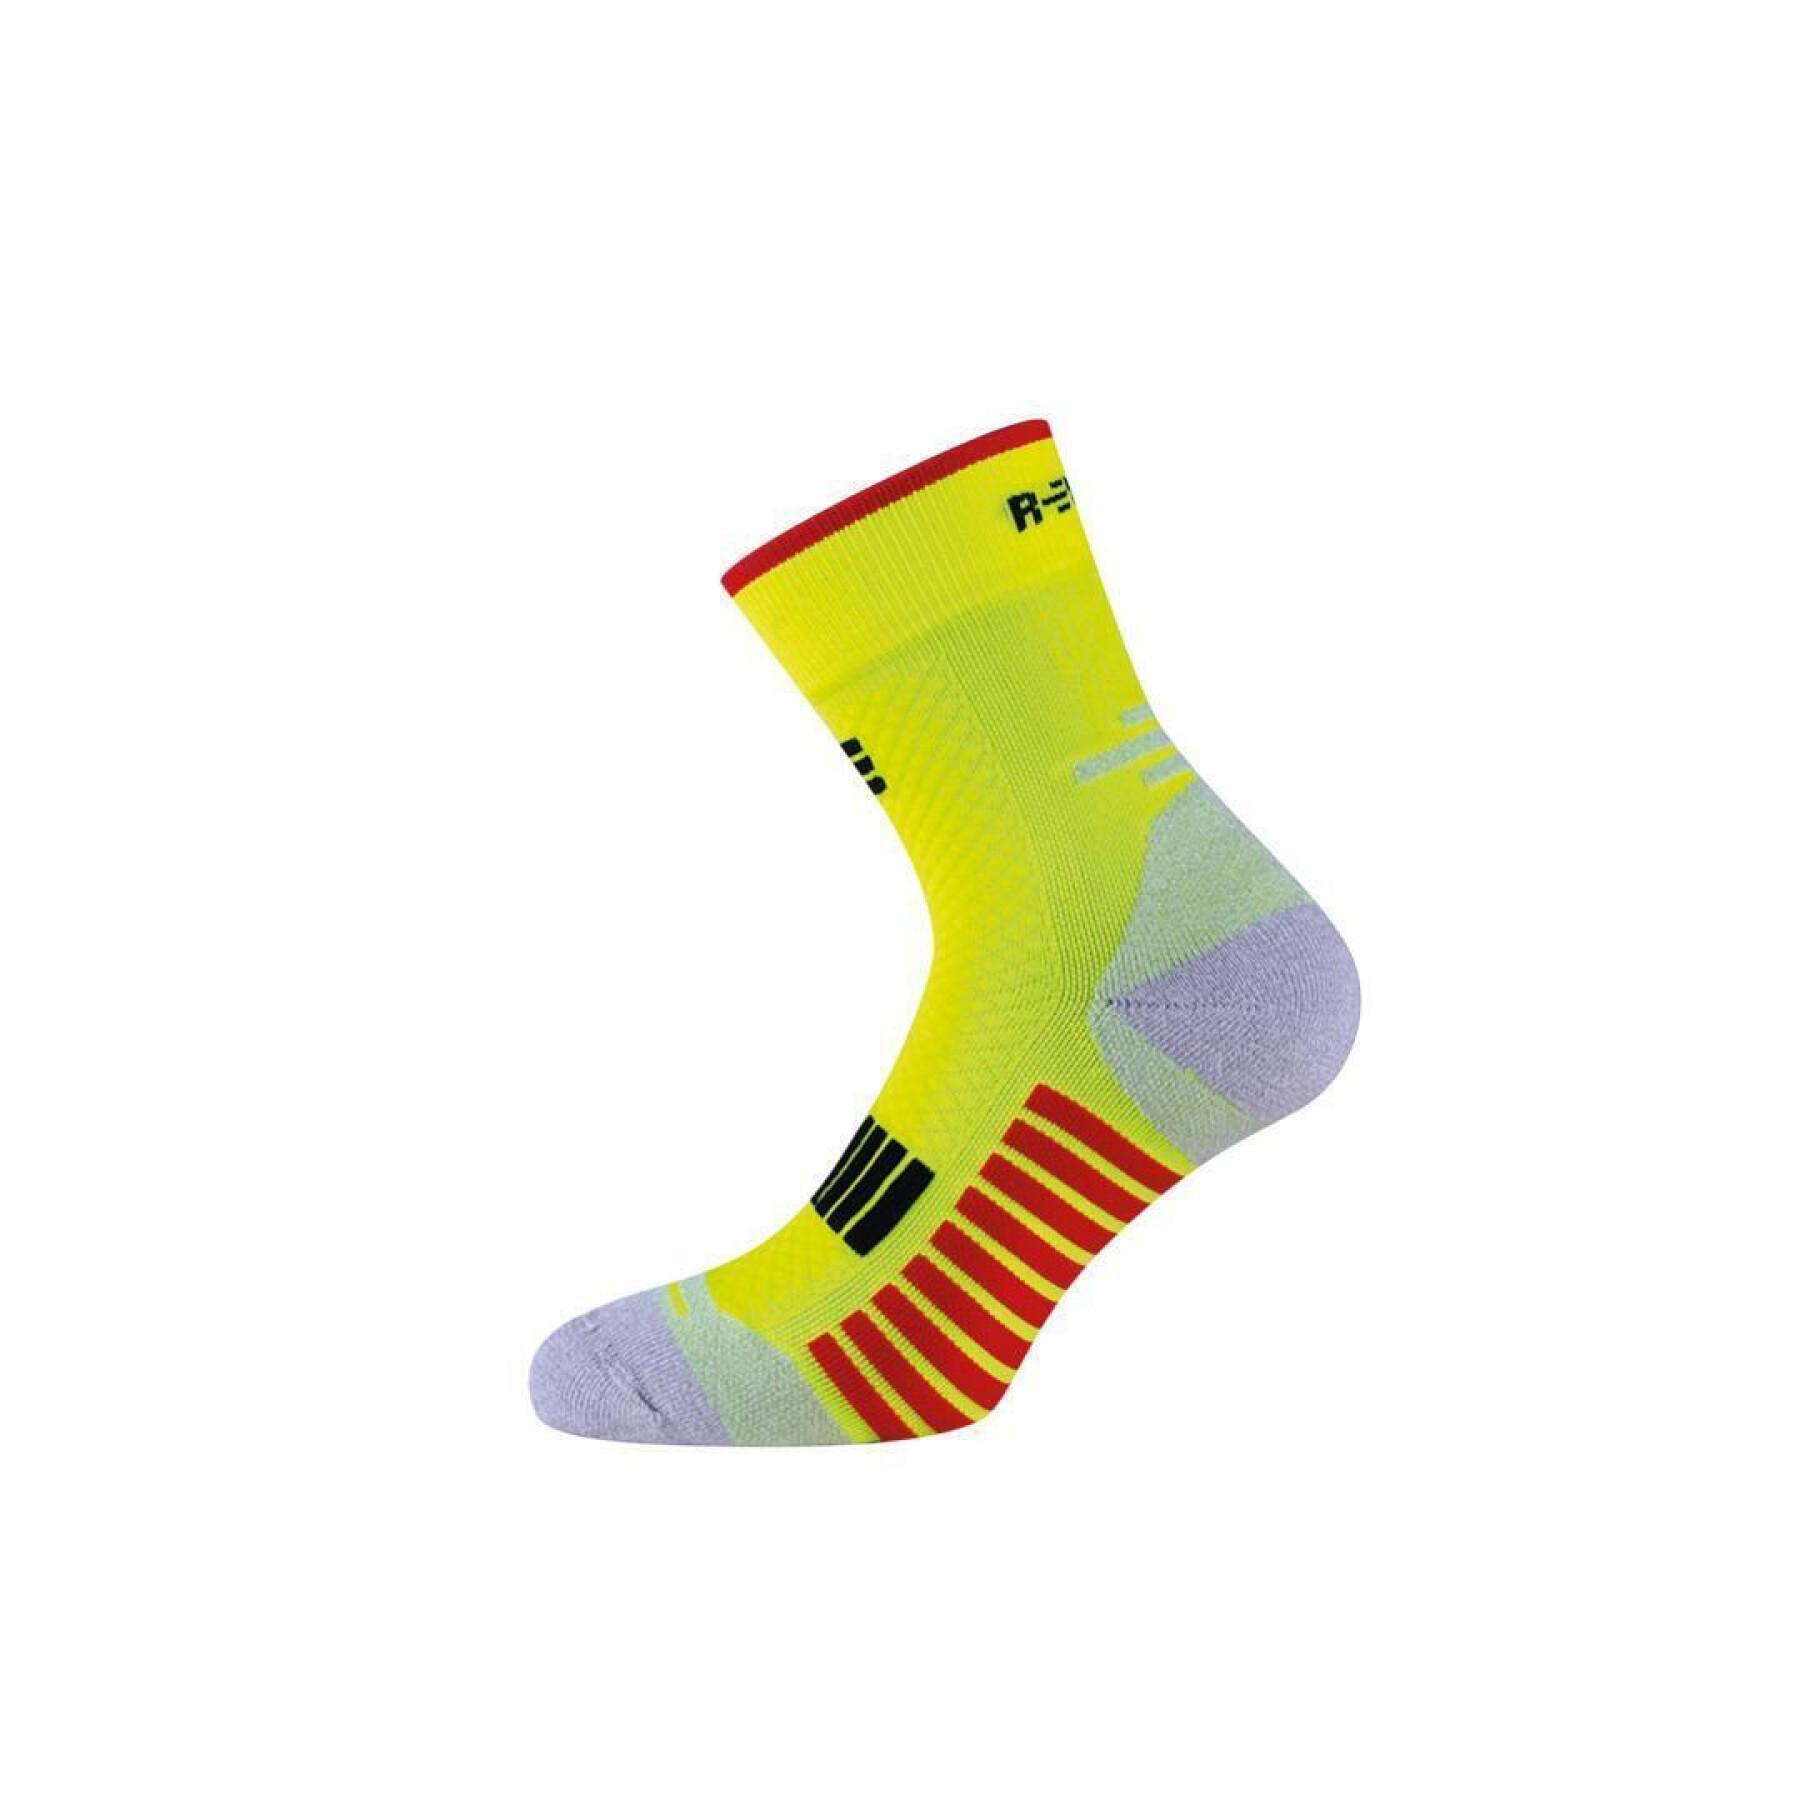 Thermo-wide technical compression socks R-Evenge